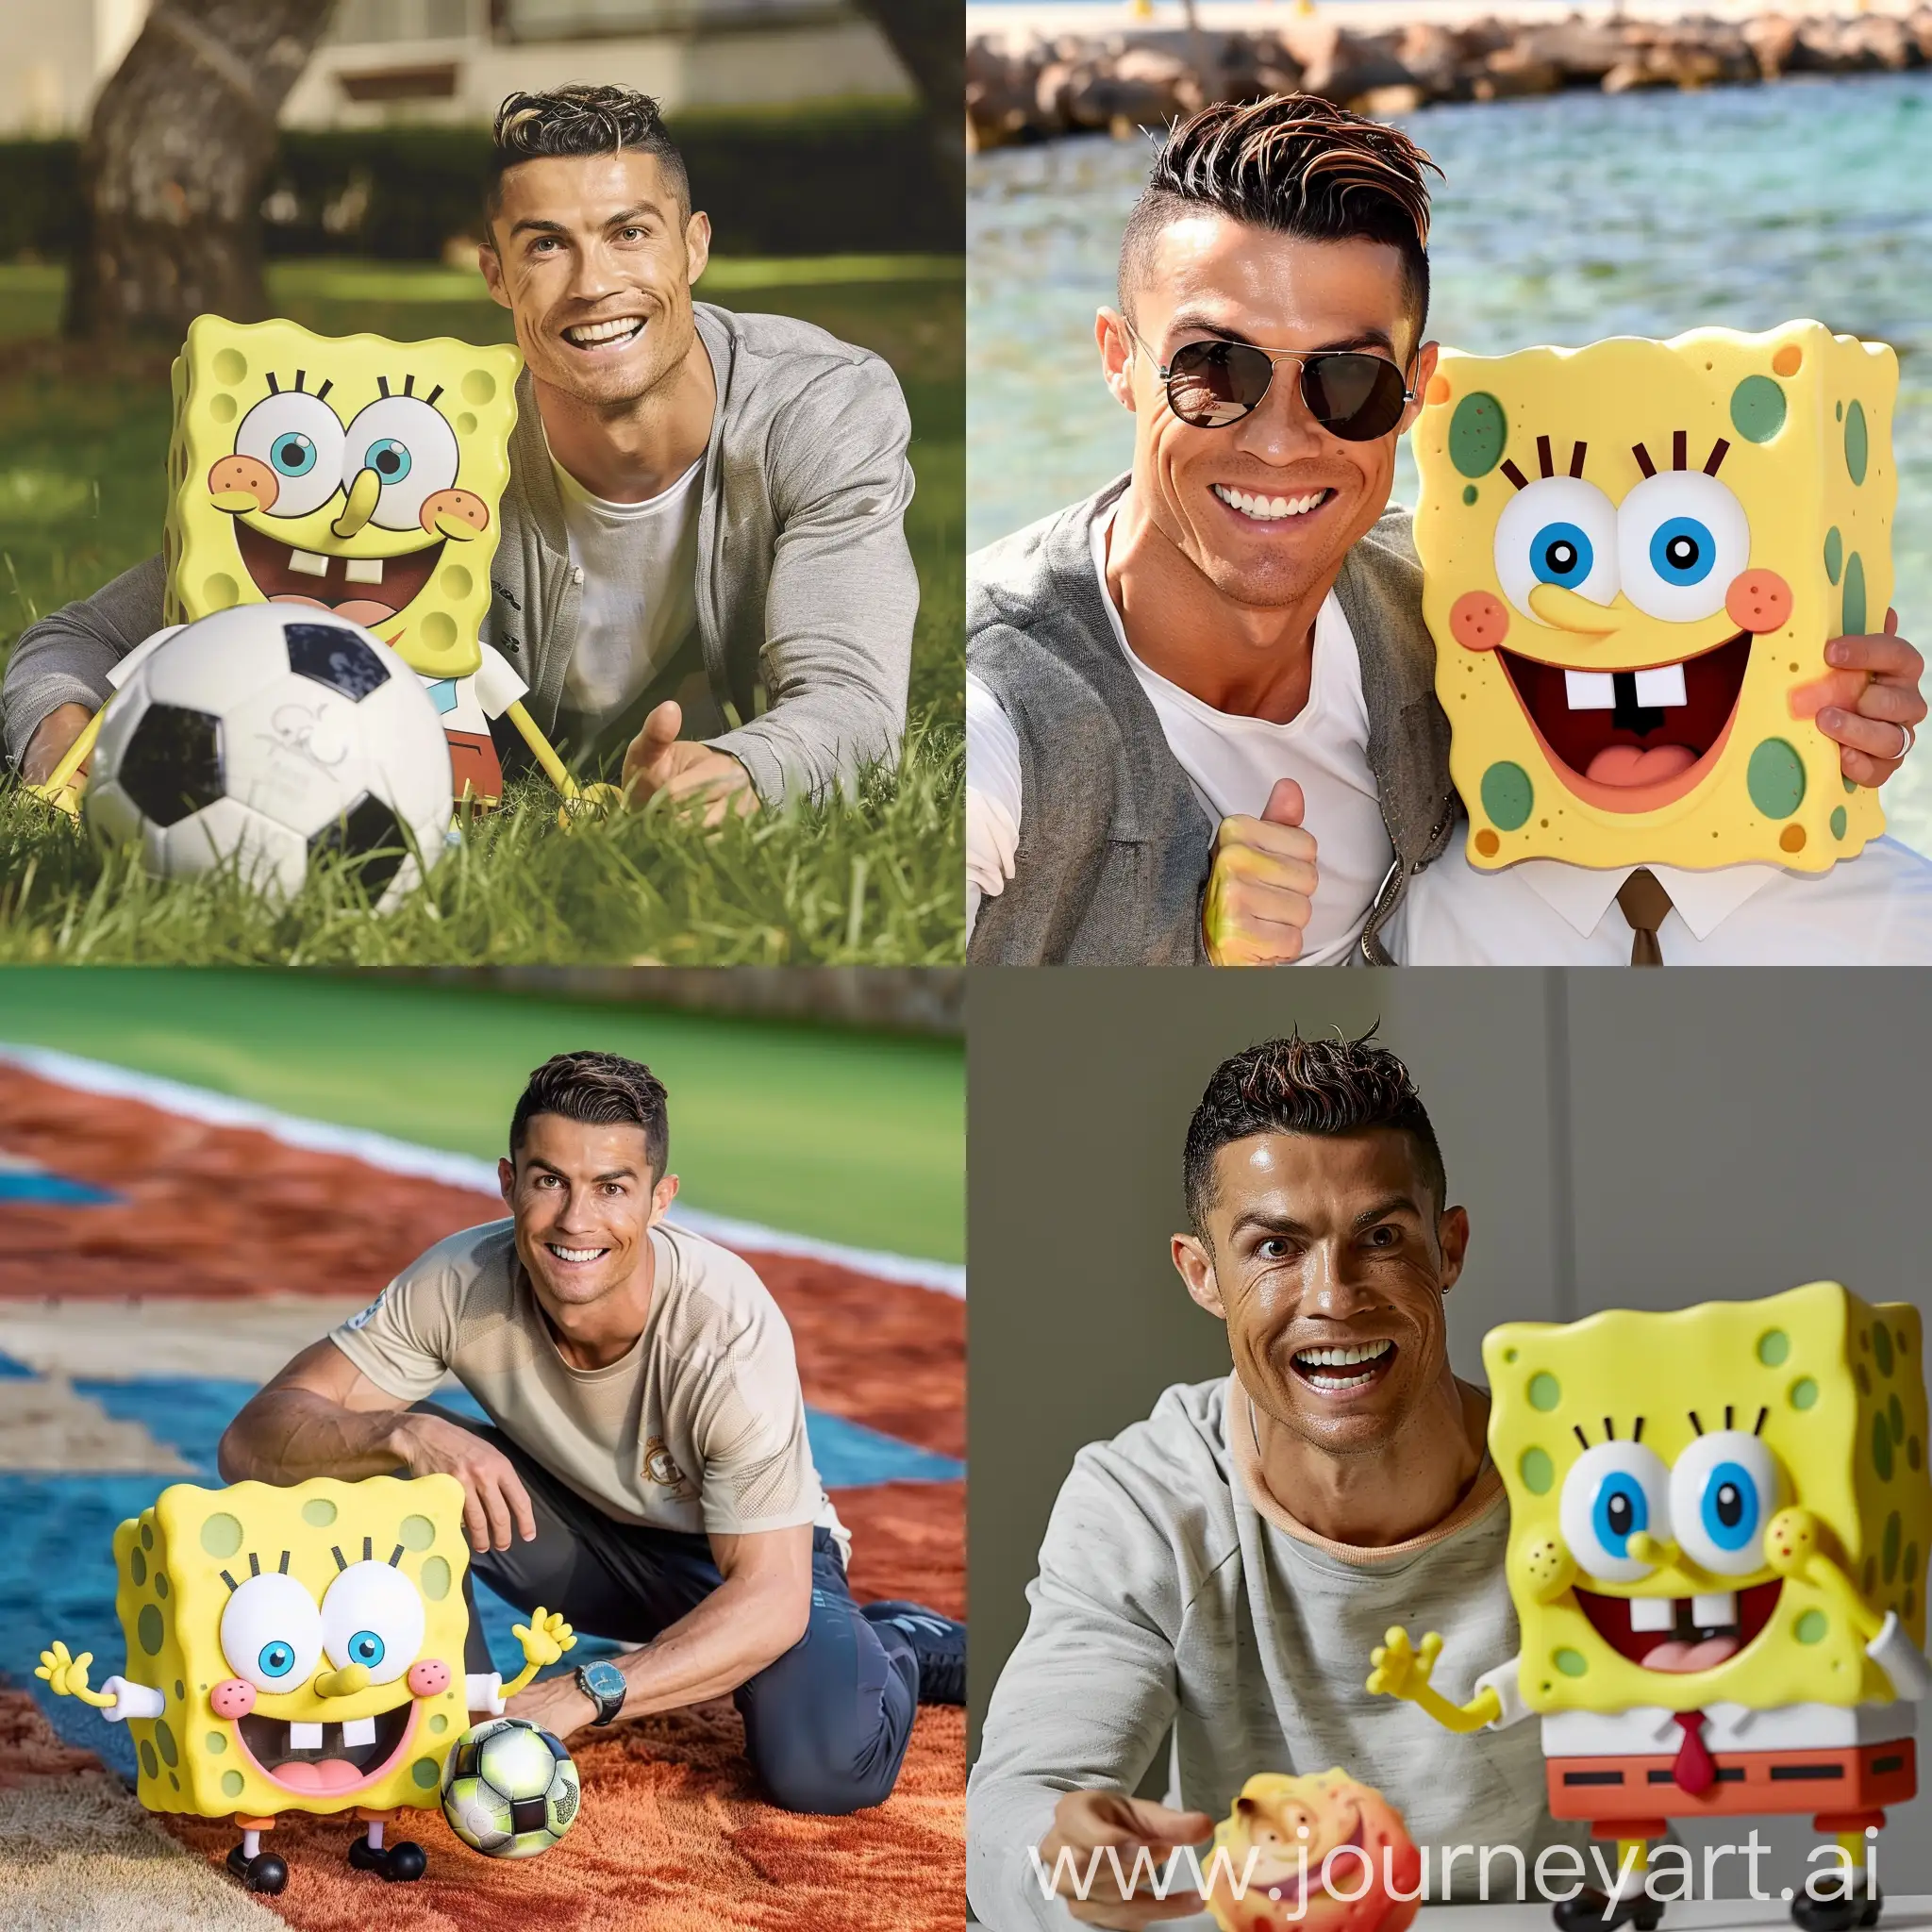 Ronaldo playing with Spongebob